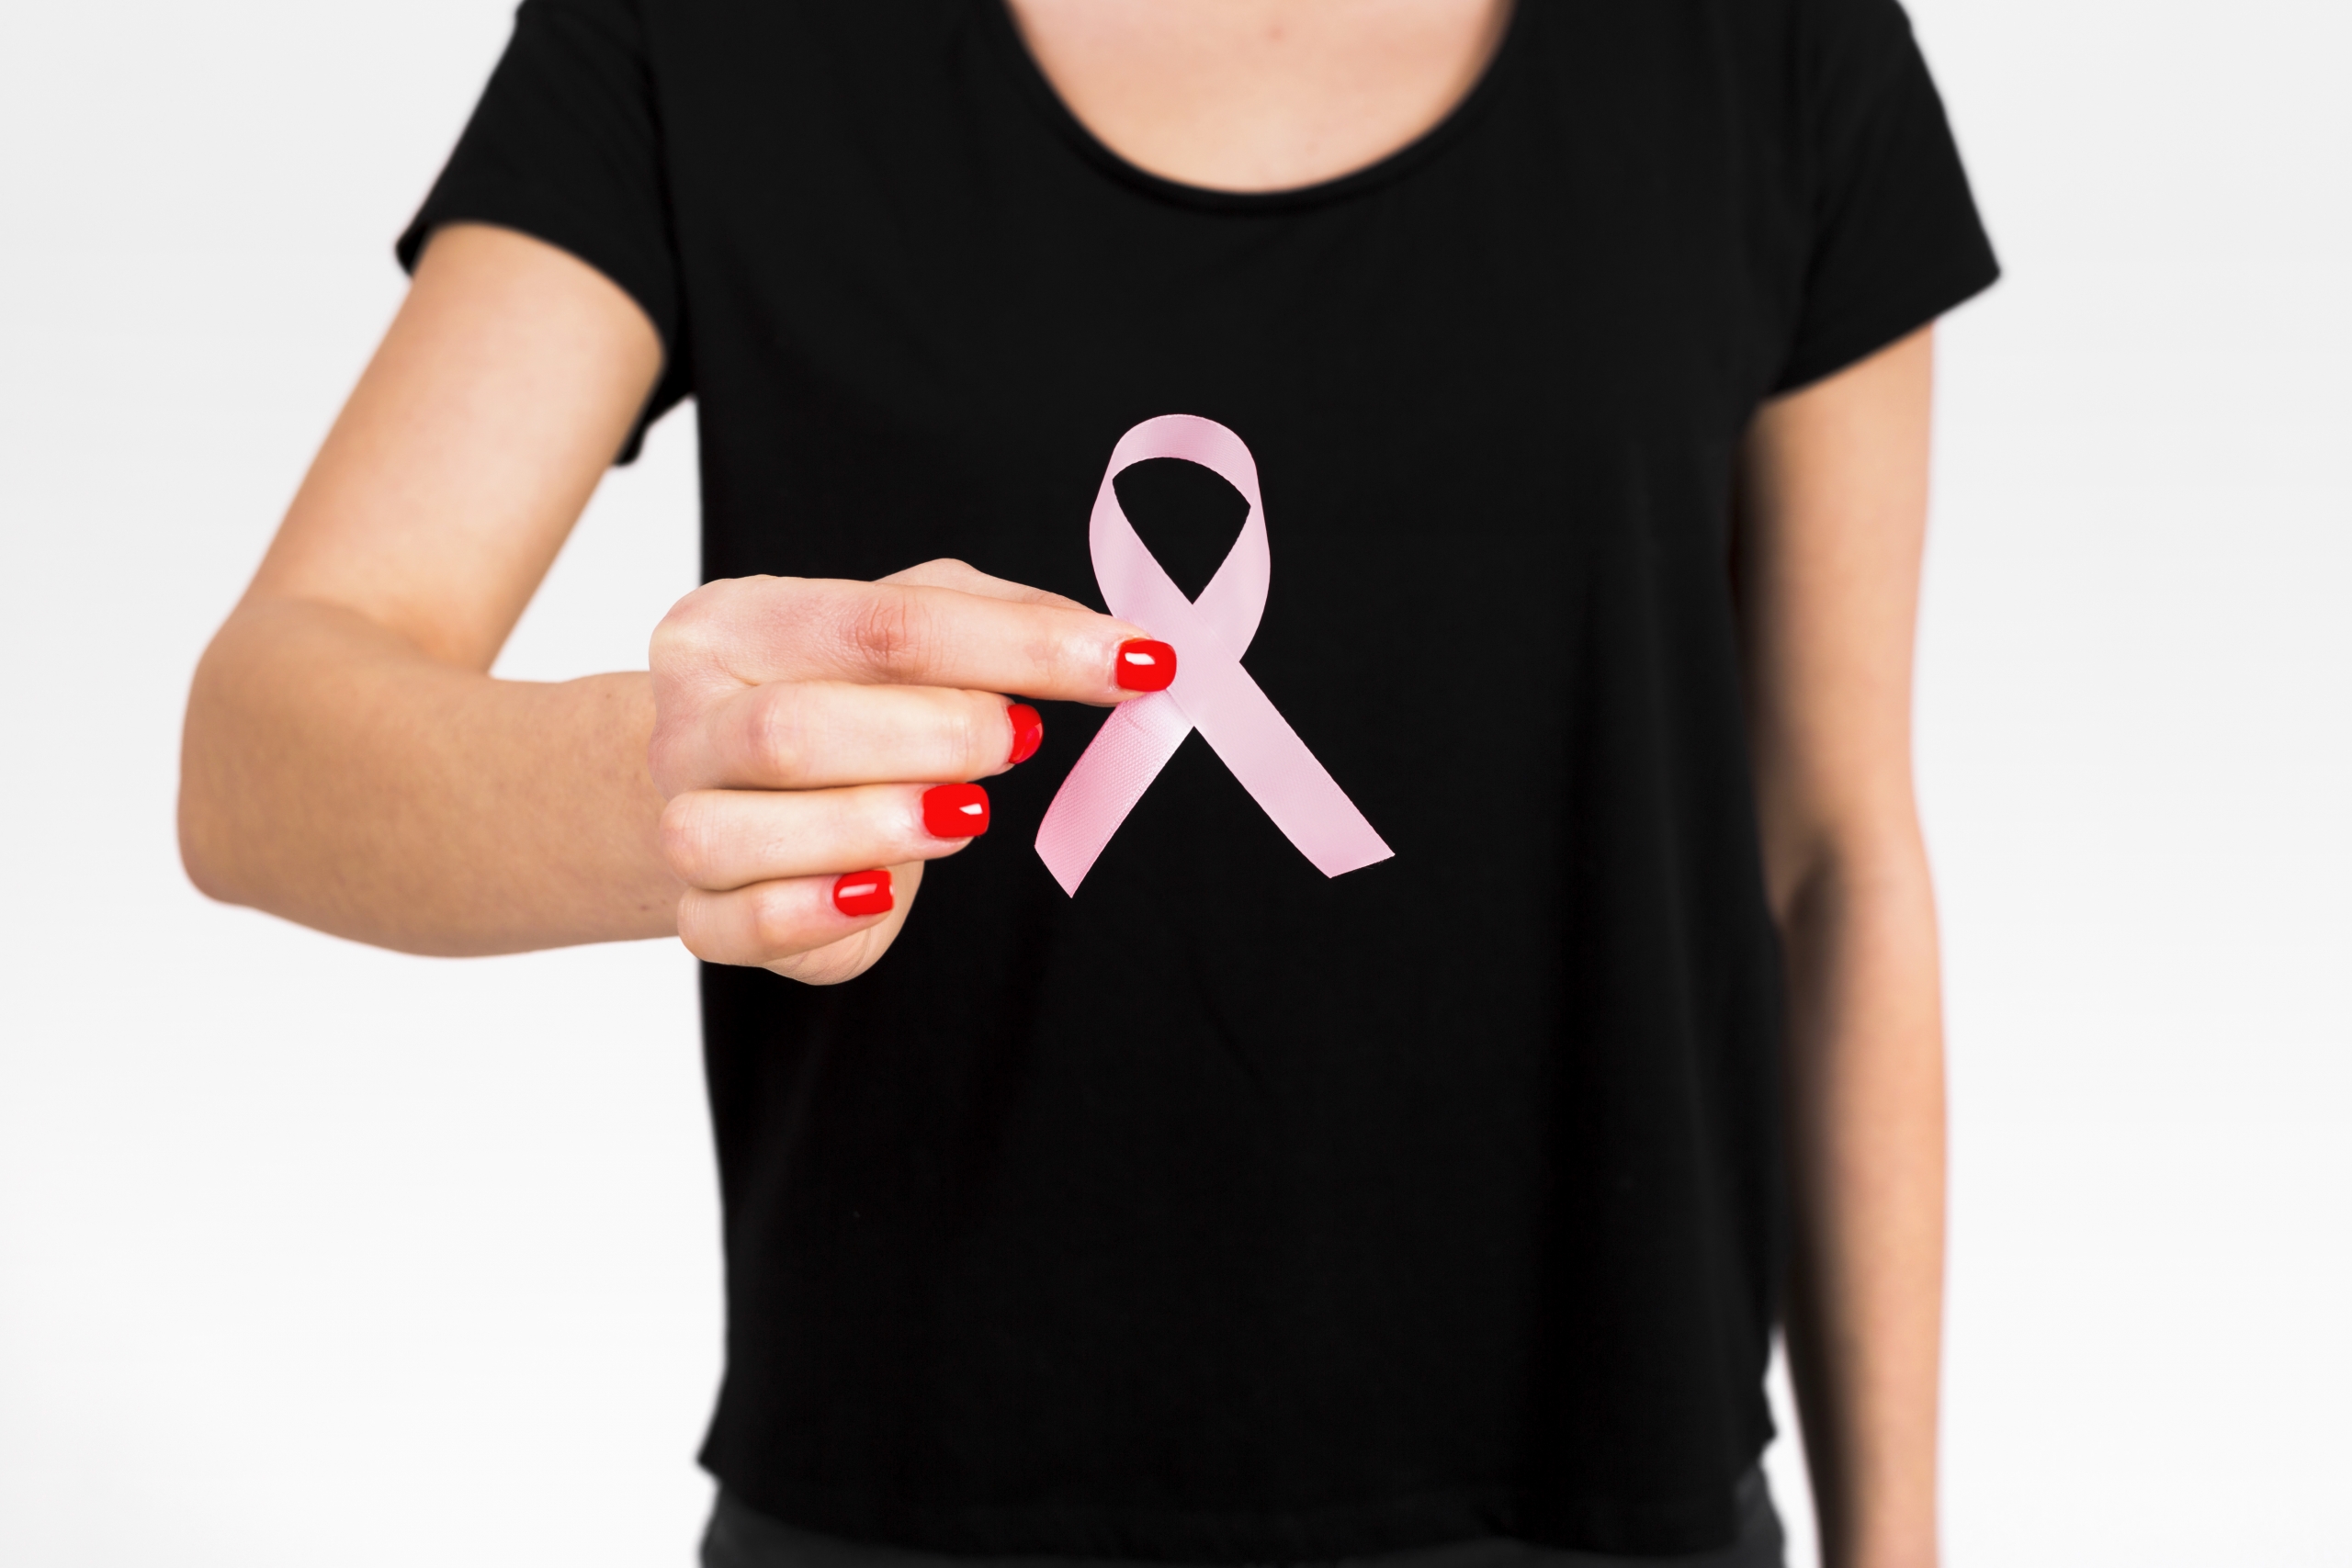 femme tenant un ruban rose symbole du cancer du sein